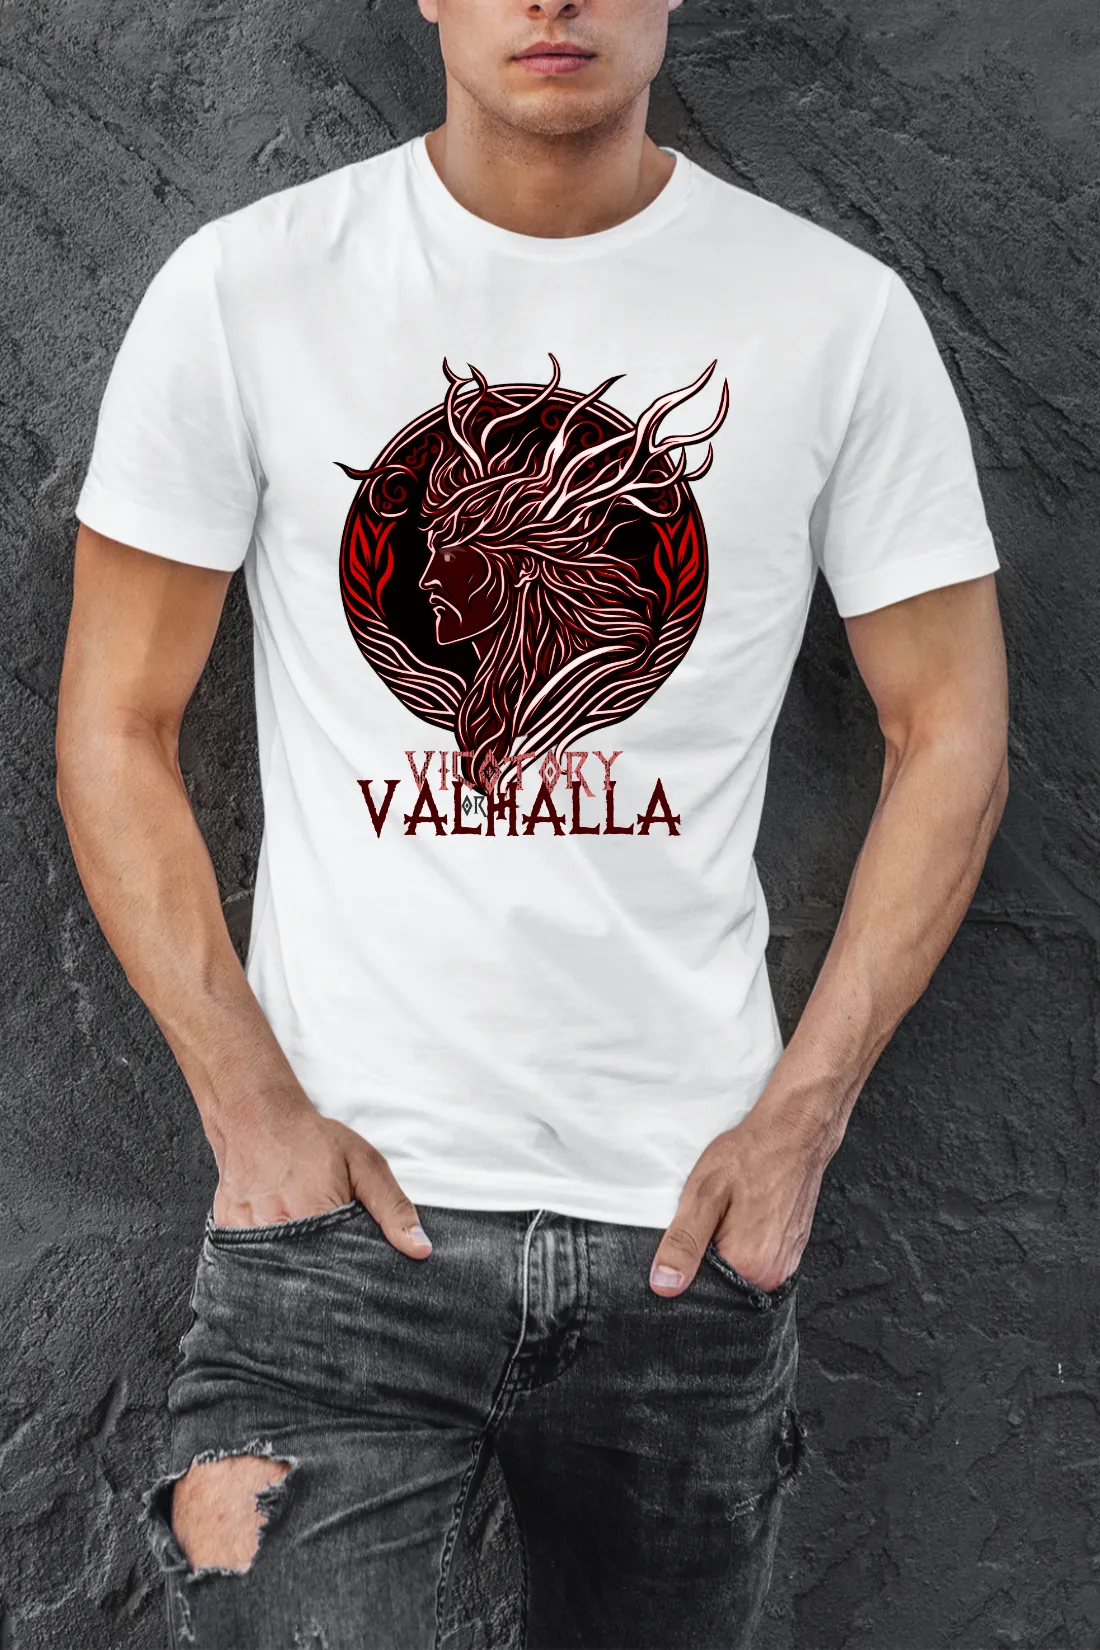 Wikinger - Victory or Valhalla